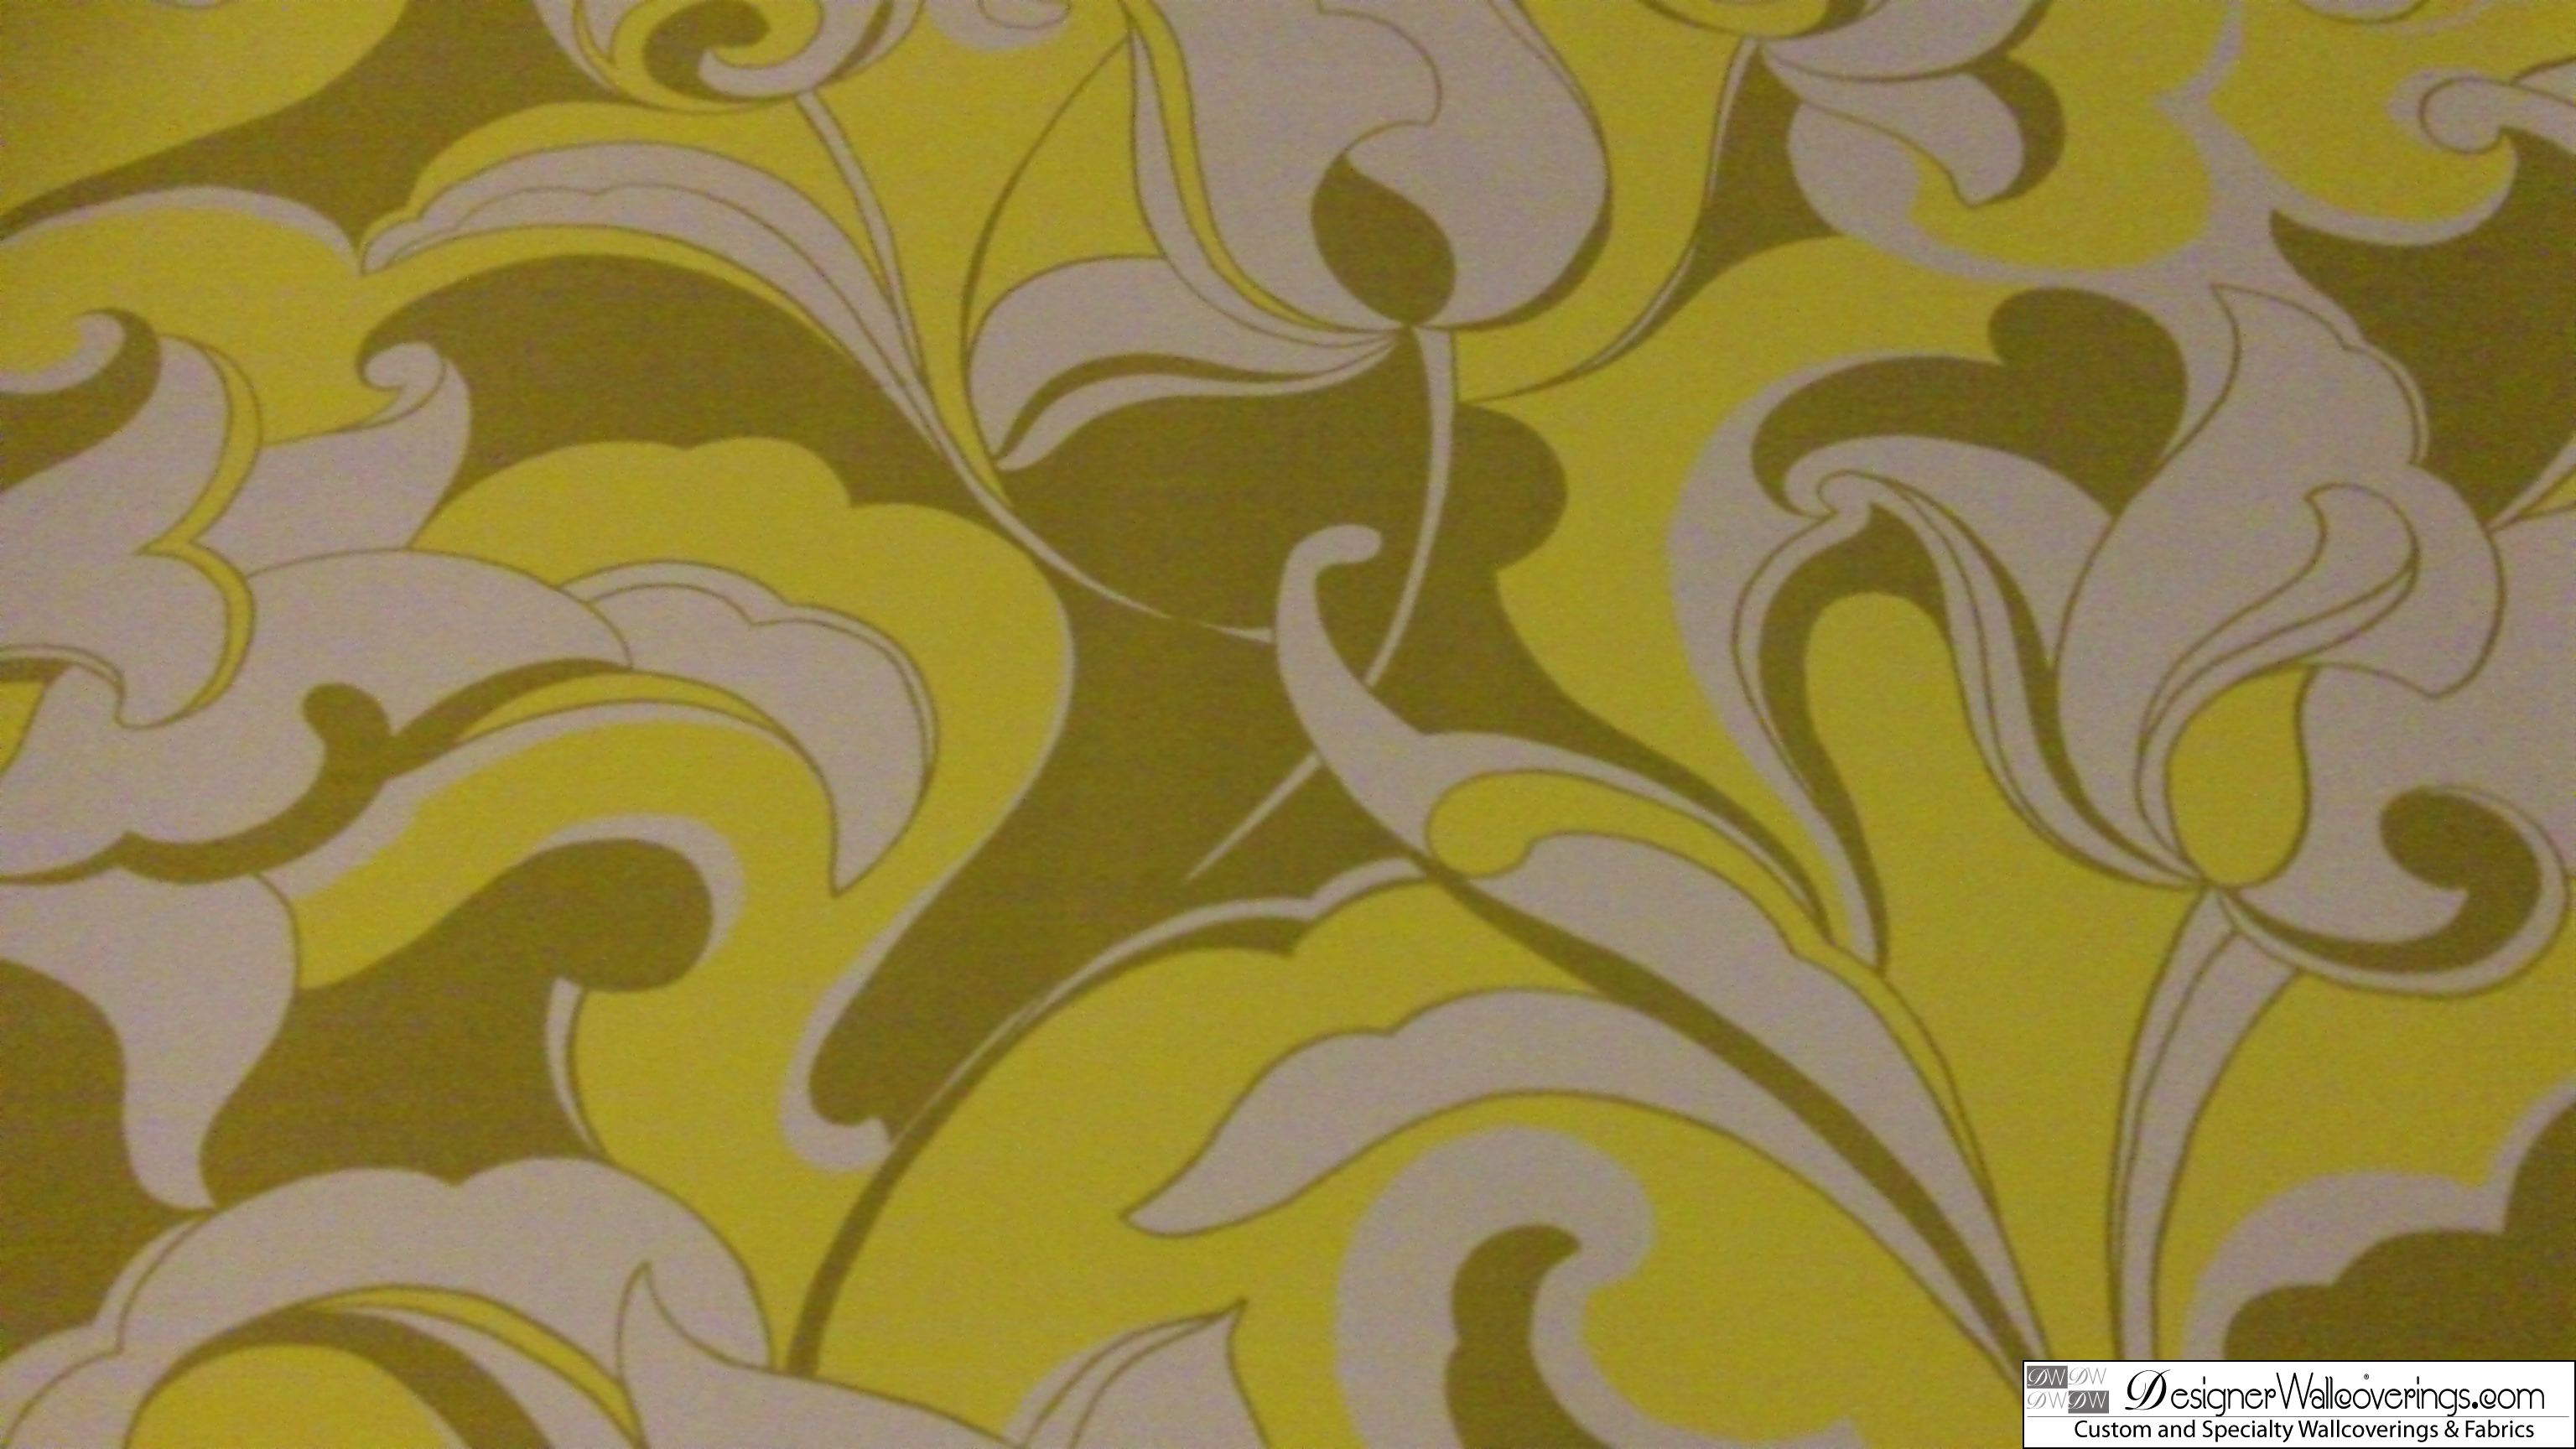 S Vintage Swirl Wallpaper Dig Designer Wallcoverings